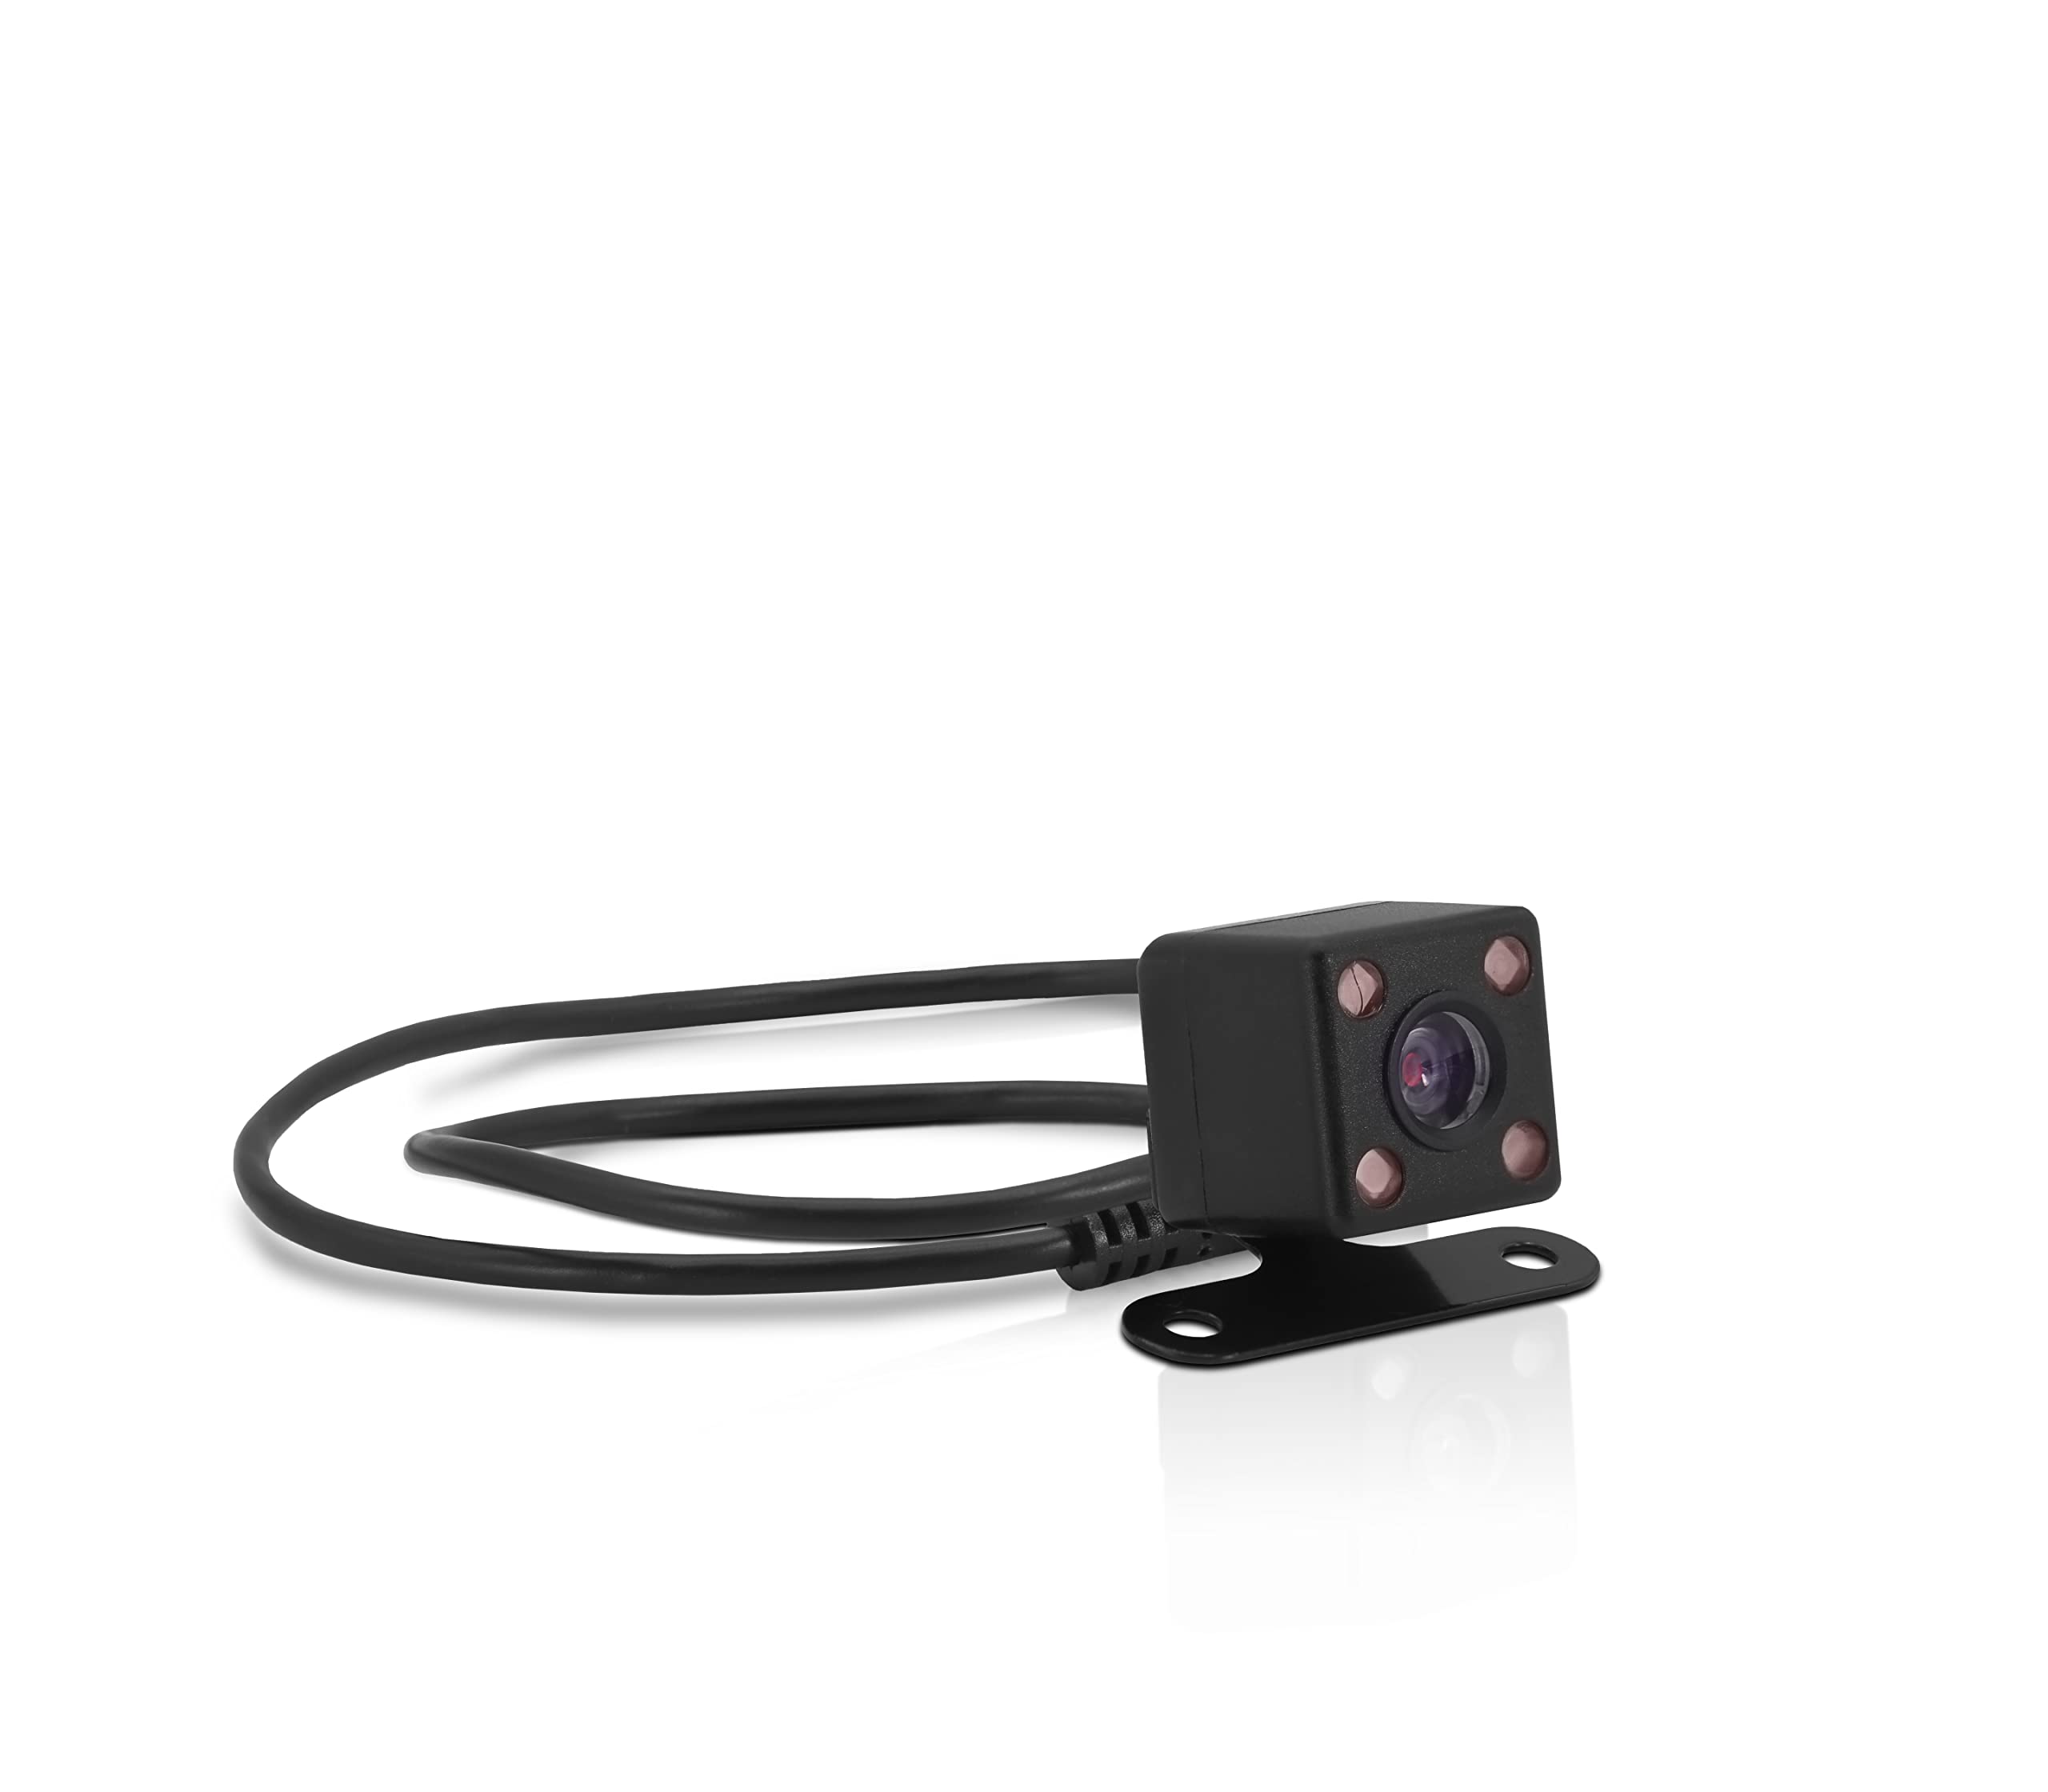 Minolta MNCD415T 3-Channel 1080p Car Camcorder w/4.0